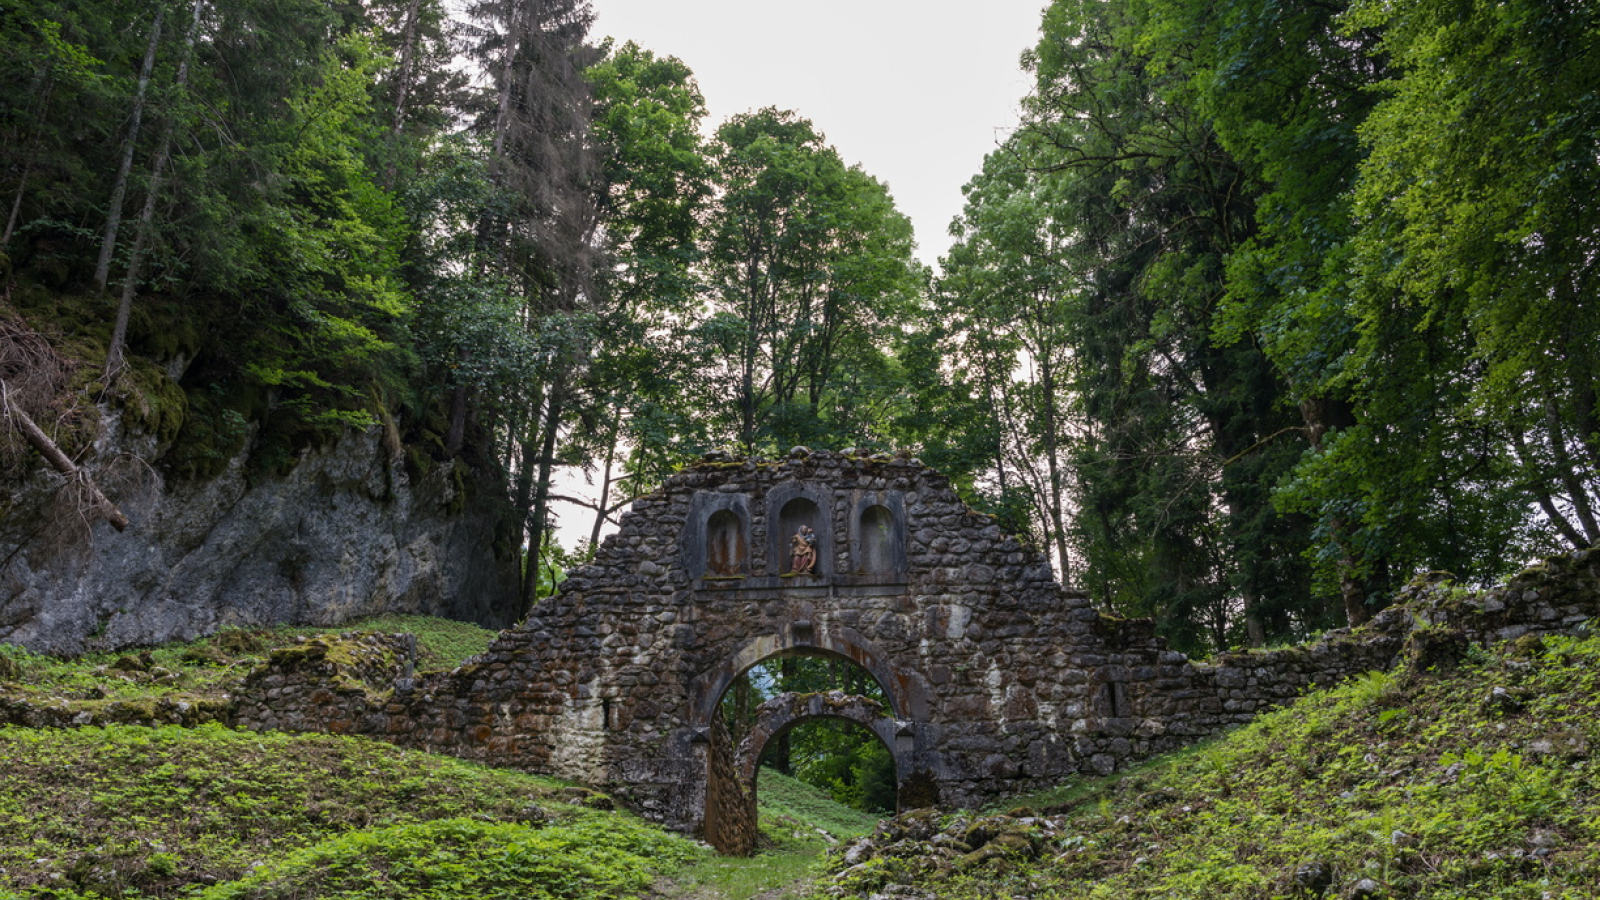 Ruins of the former farm Porte d'Age in Le Reposoir, Haute-Savoie, France